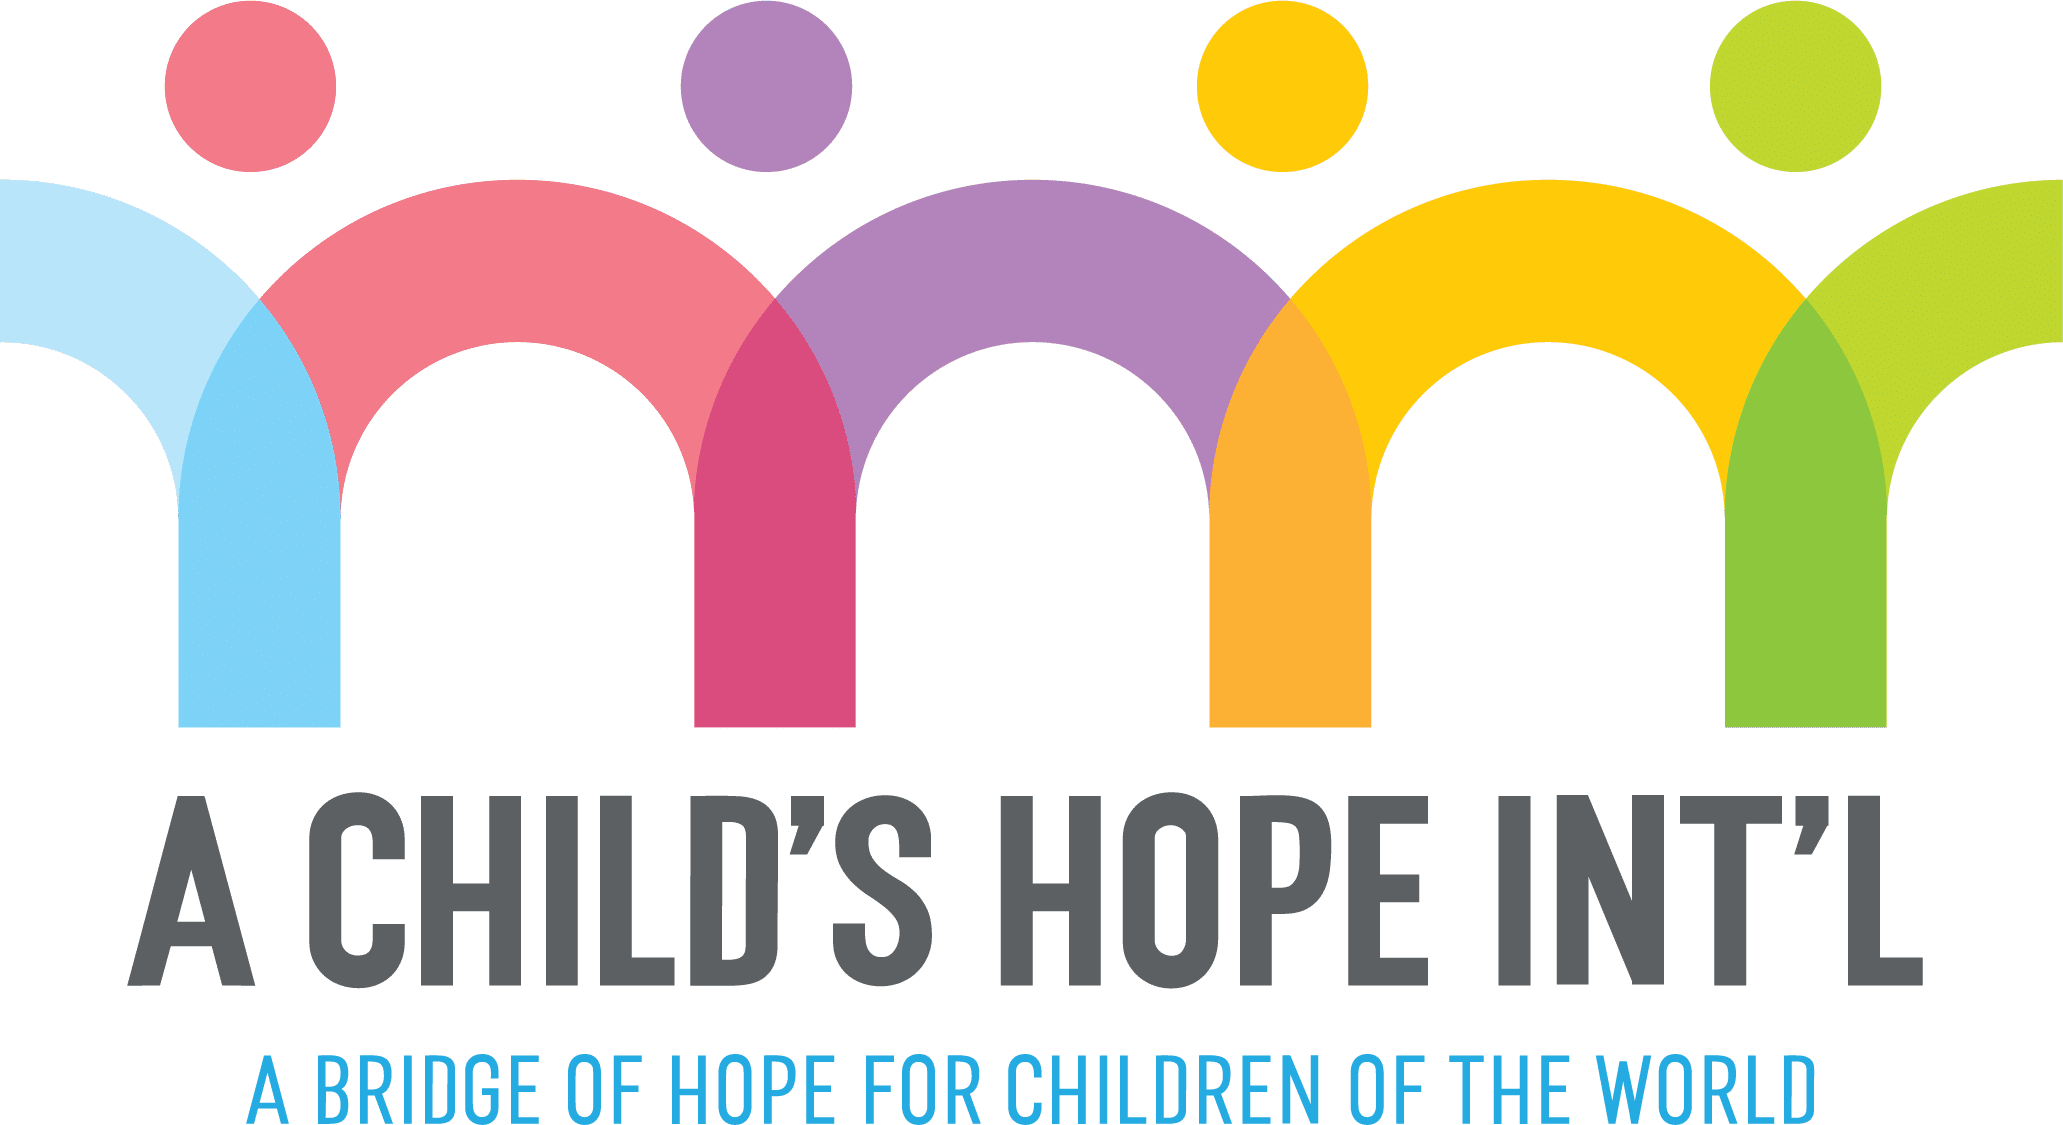 A Child’s Hope International